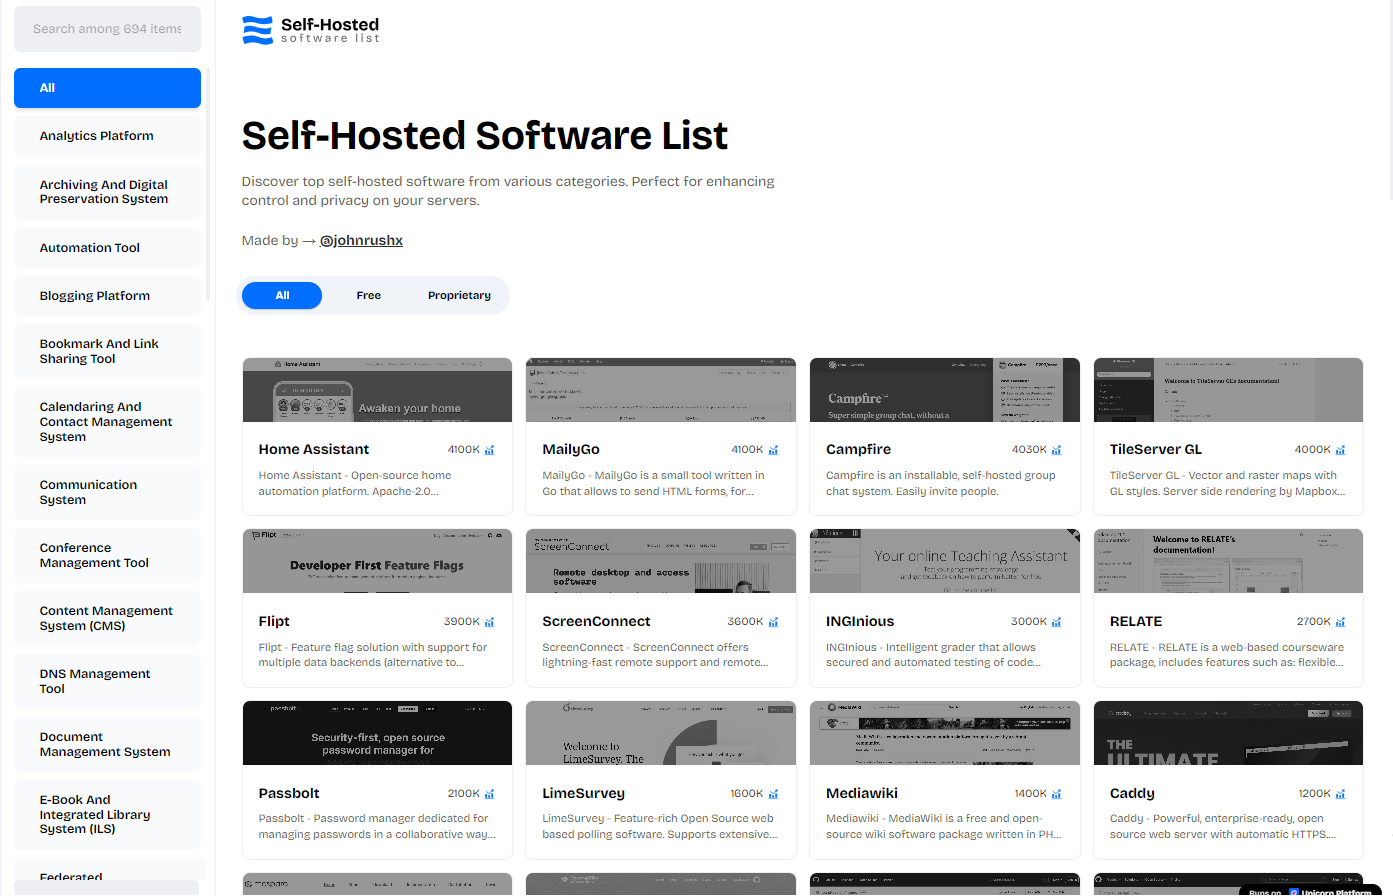 HostedSoftware.org Self-Hosted Software List